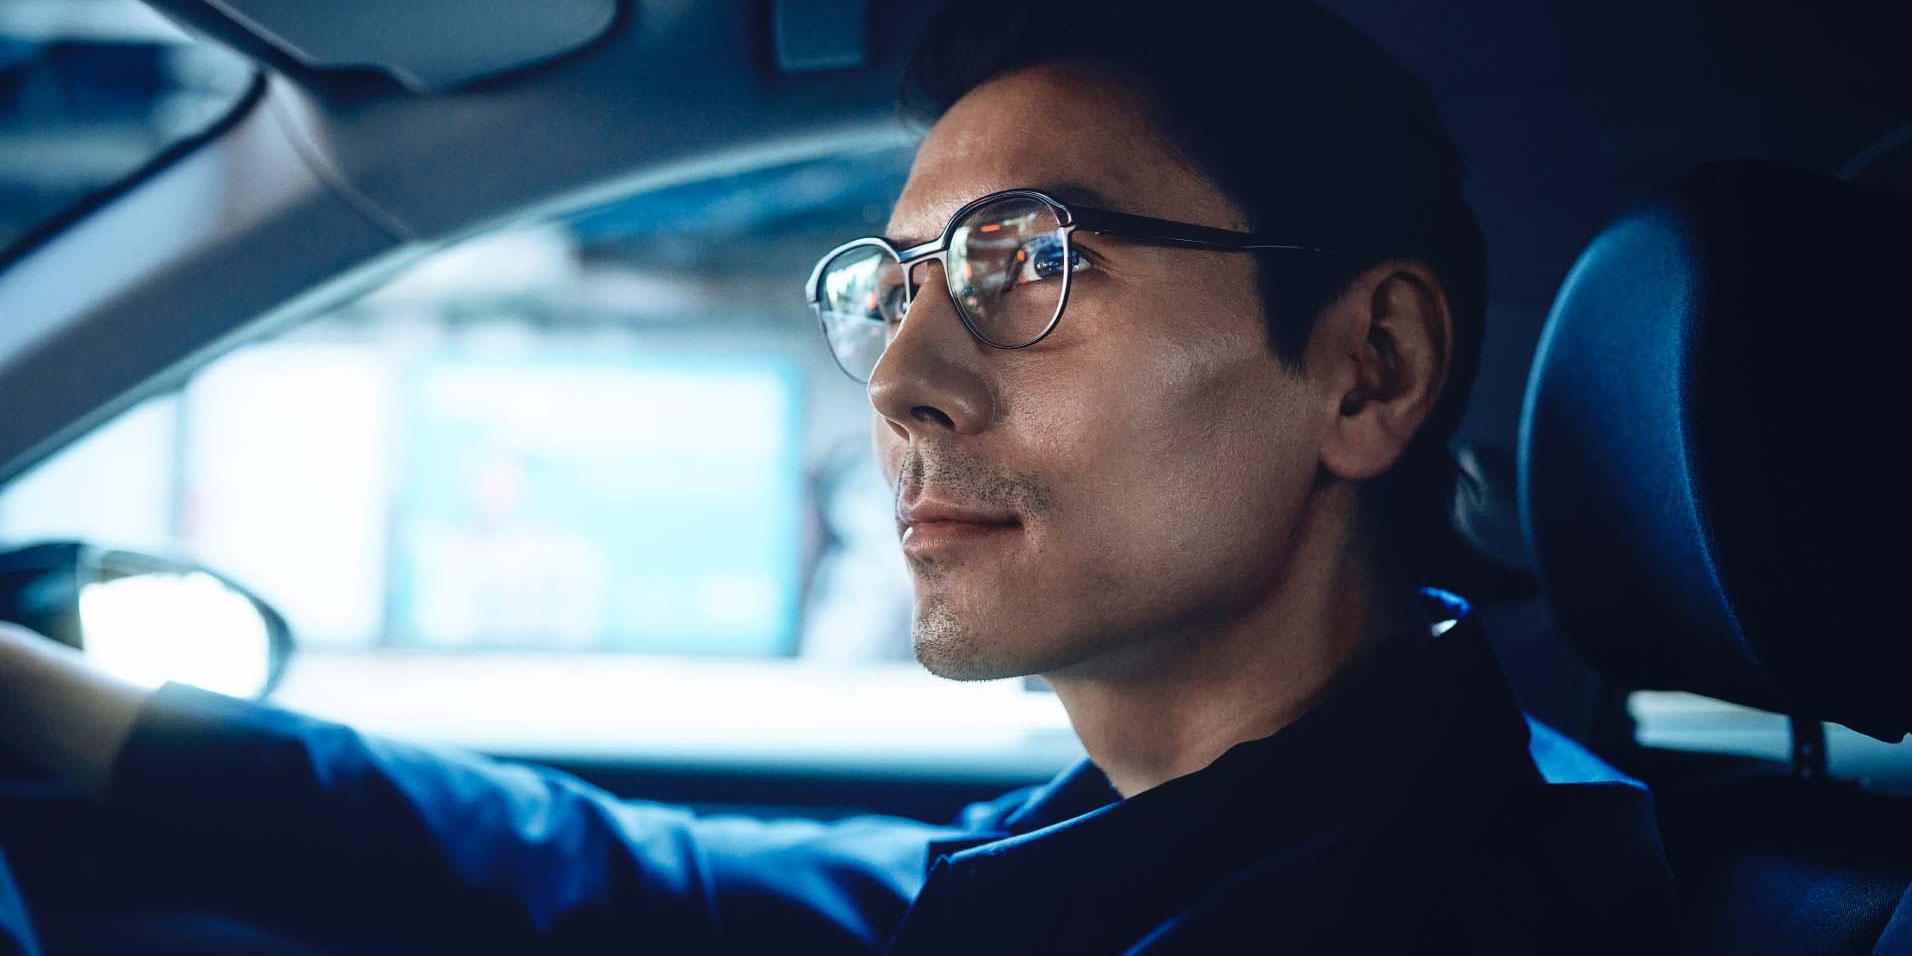 Parhaat silmälasit autolla ajamiseen – saavuta määränpääsi turvallisesti